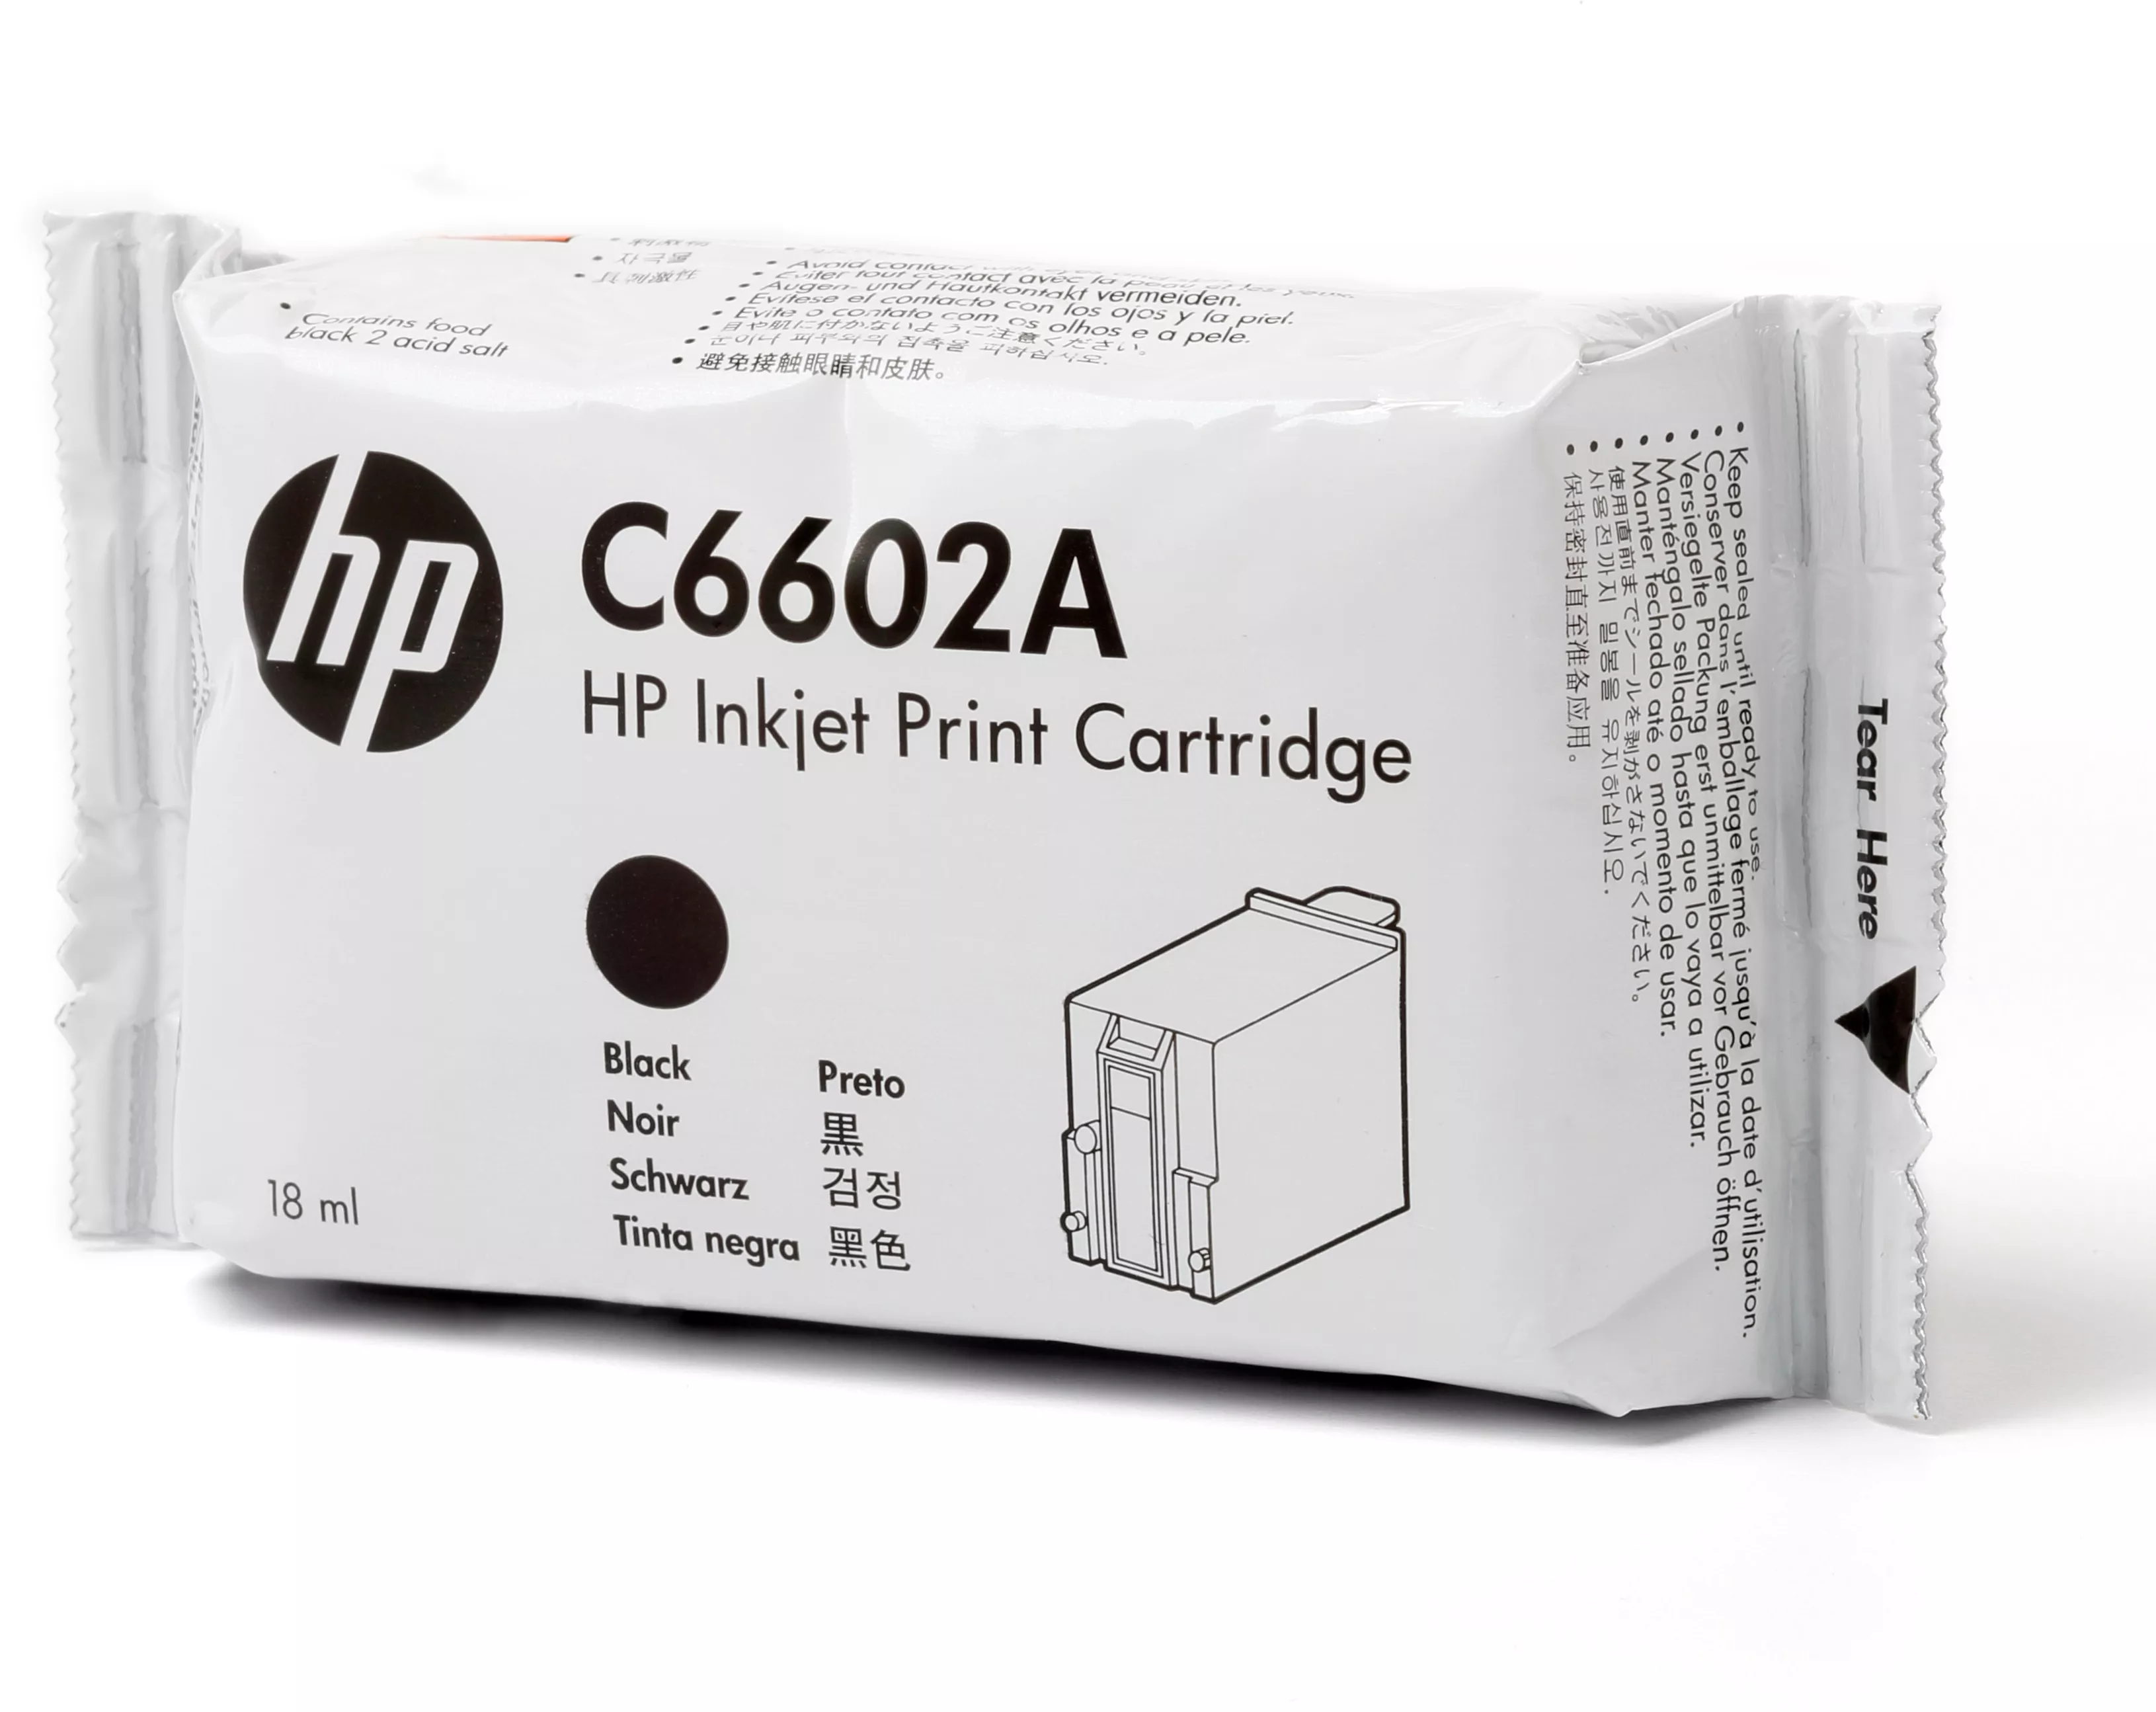 Vente HP original TIJ 1.0 original Ink cartridge C6602A HP au meilleur prix - visuel 2